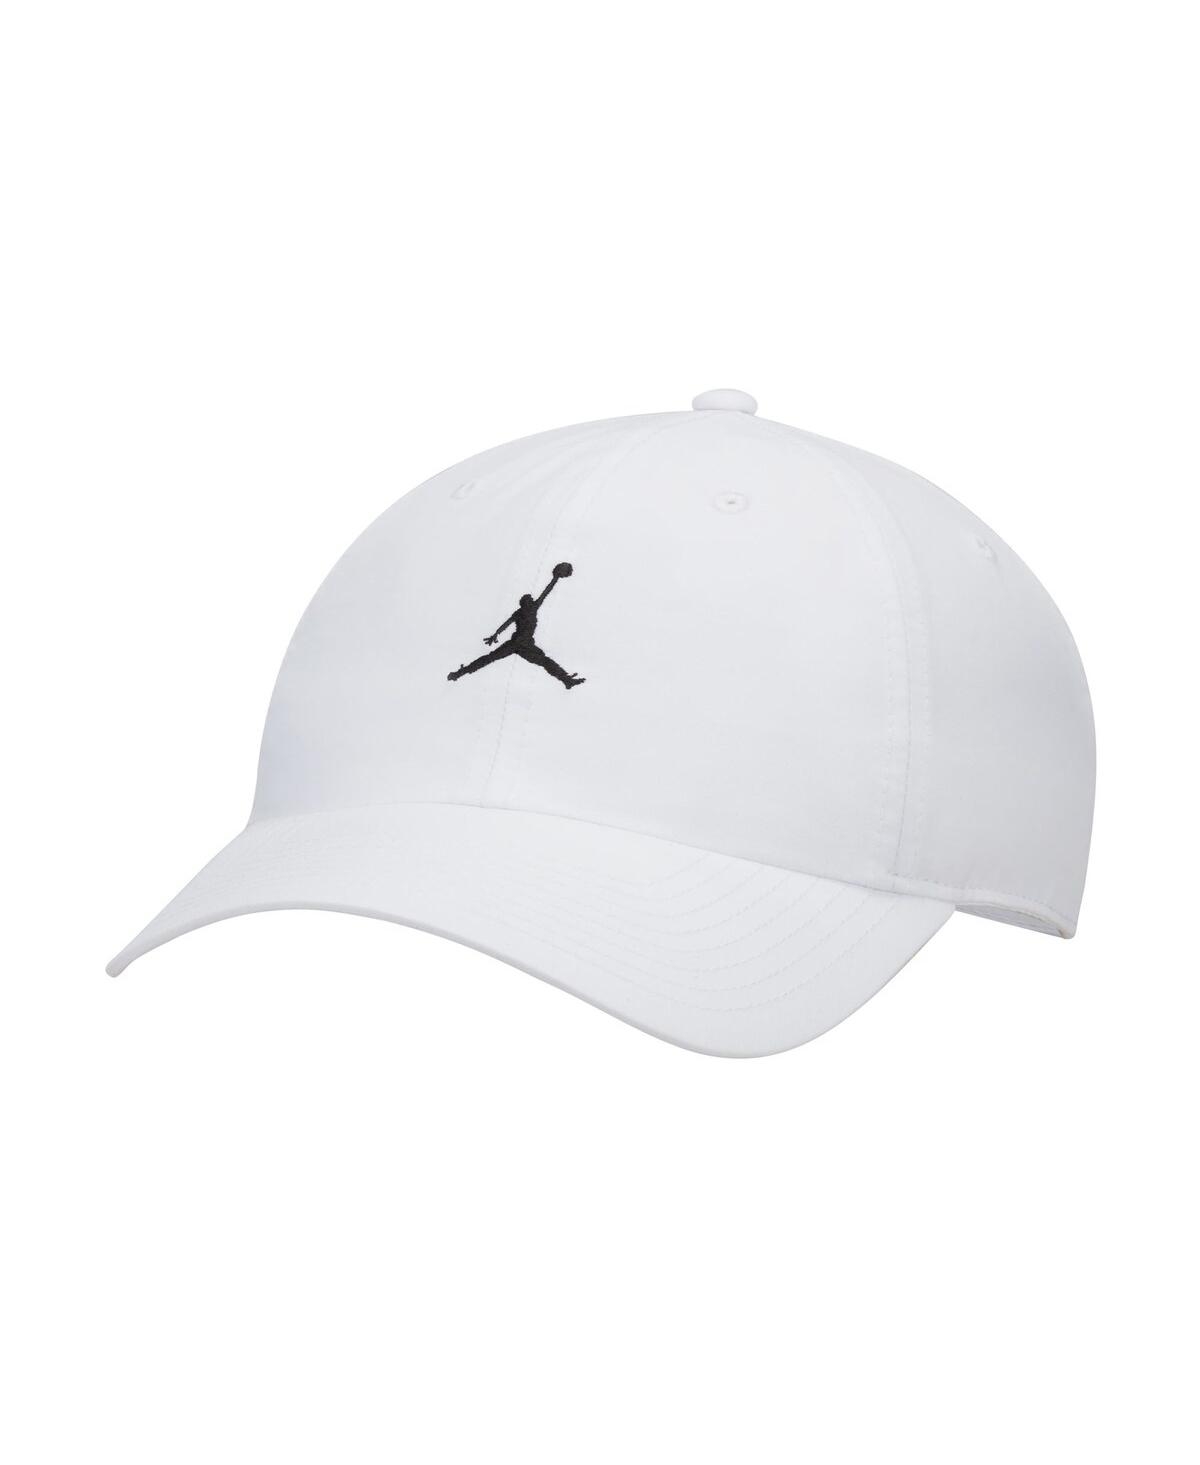 Men's Jordan White Jumpman Club Adjustable Hat - White